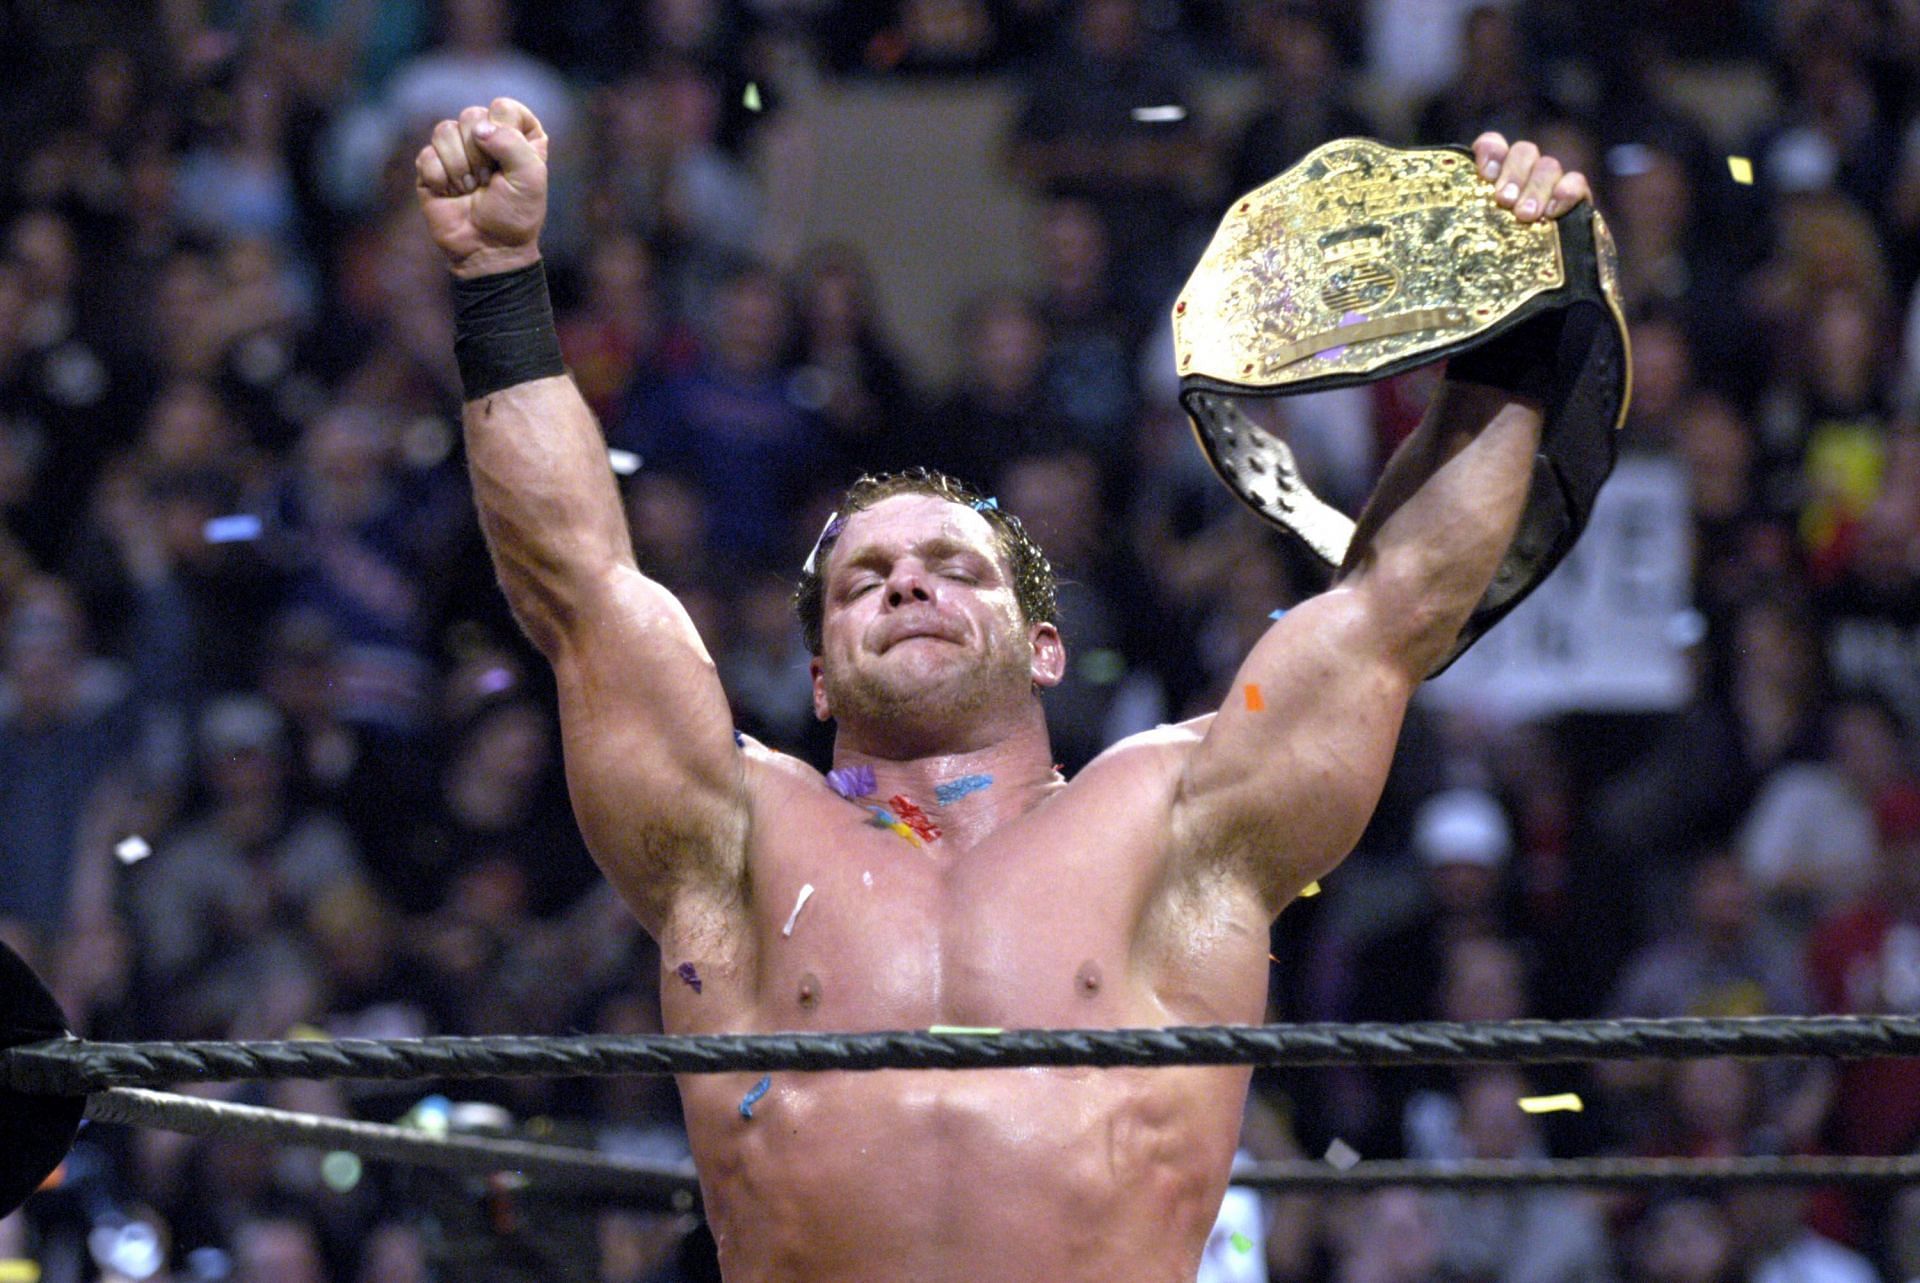 Chris Benoit after his title win at WrestleMania XX